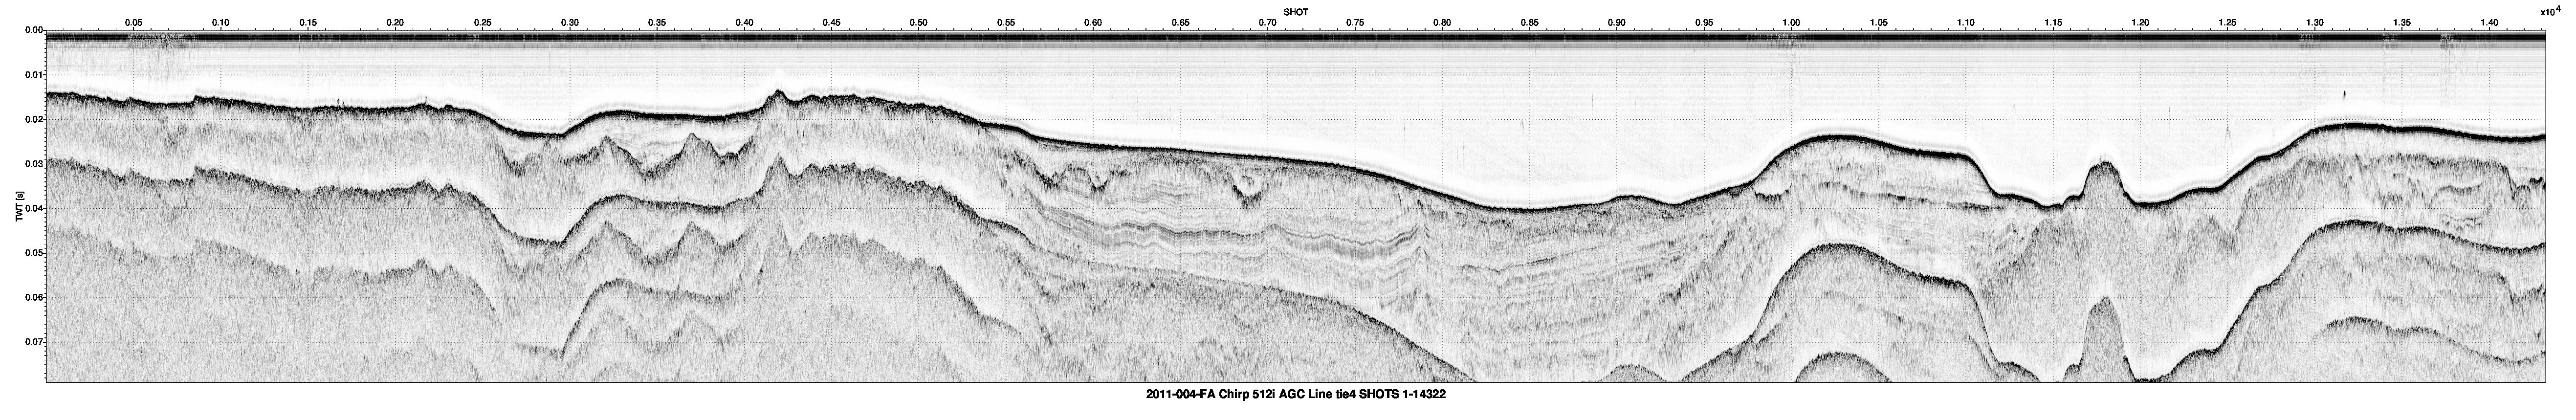 JPEG image of a chirp seismic-reflection profile